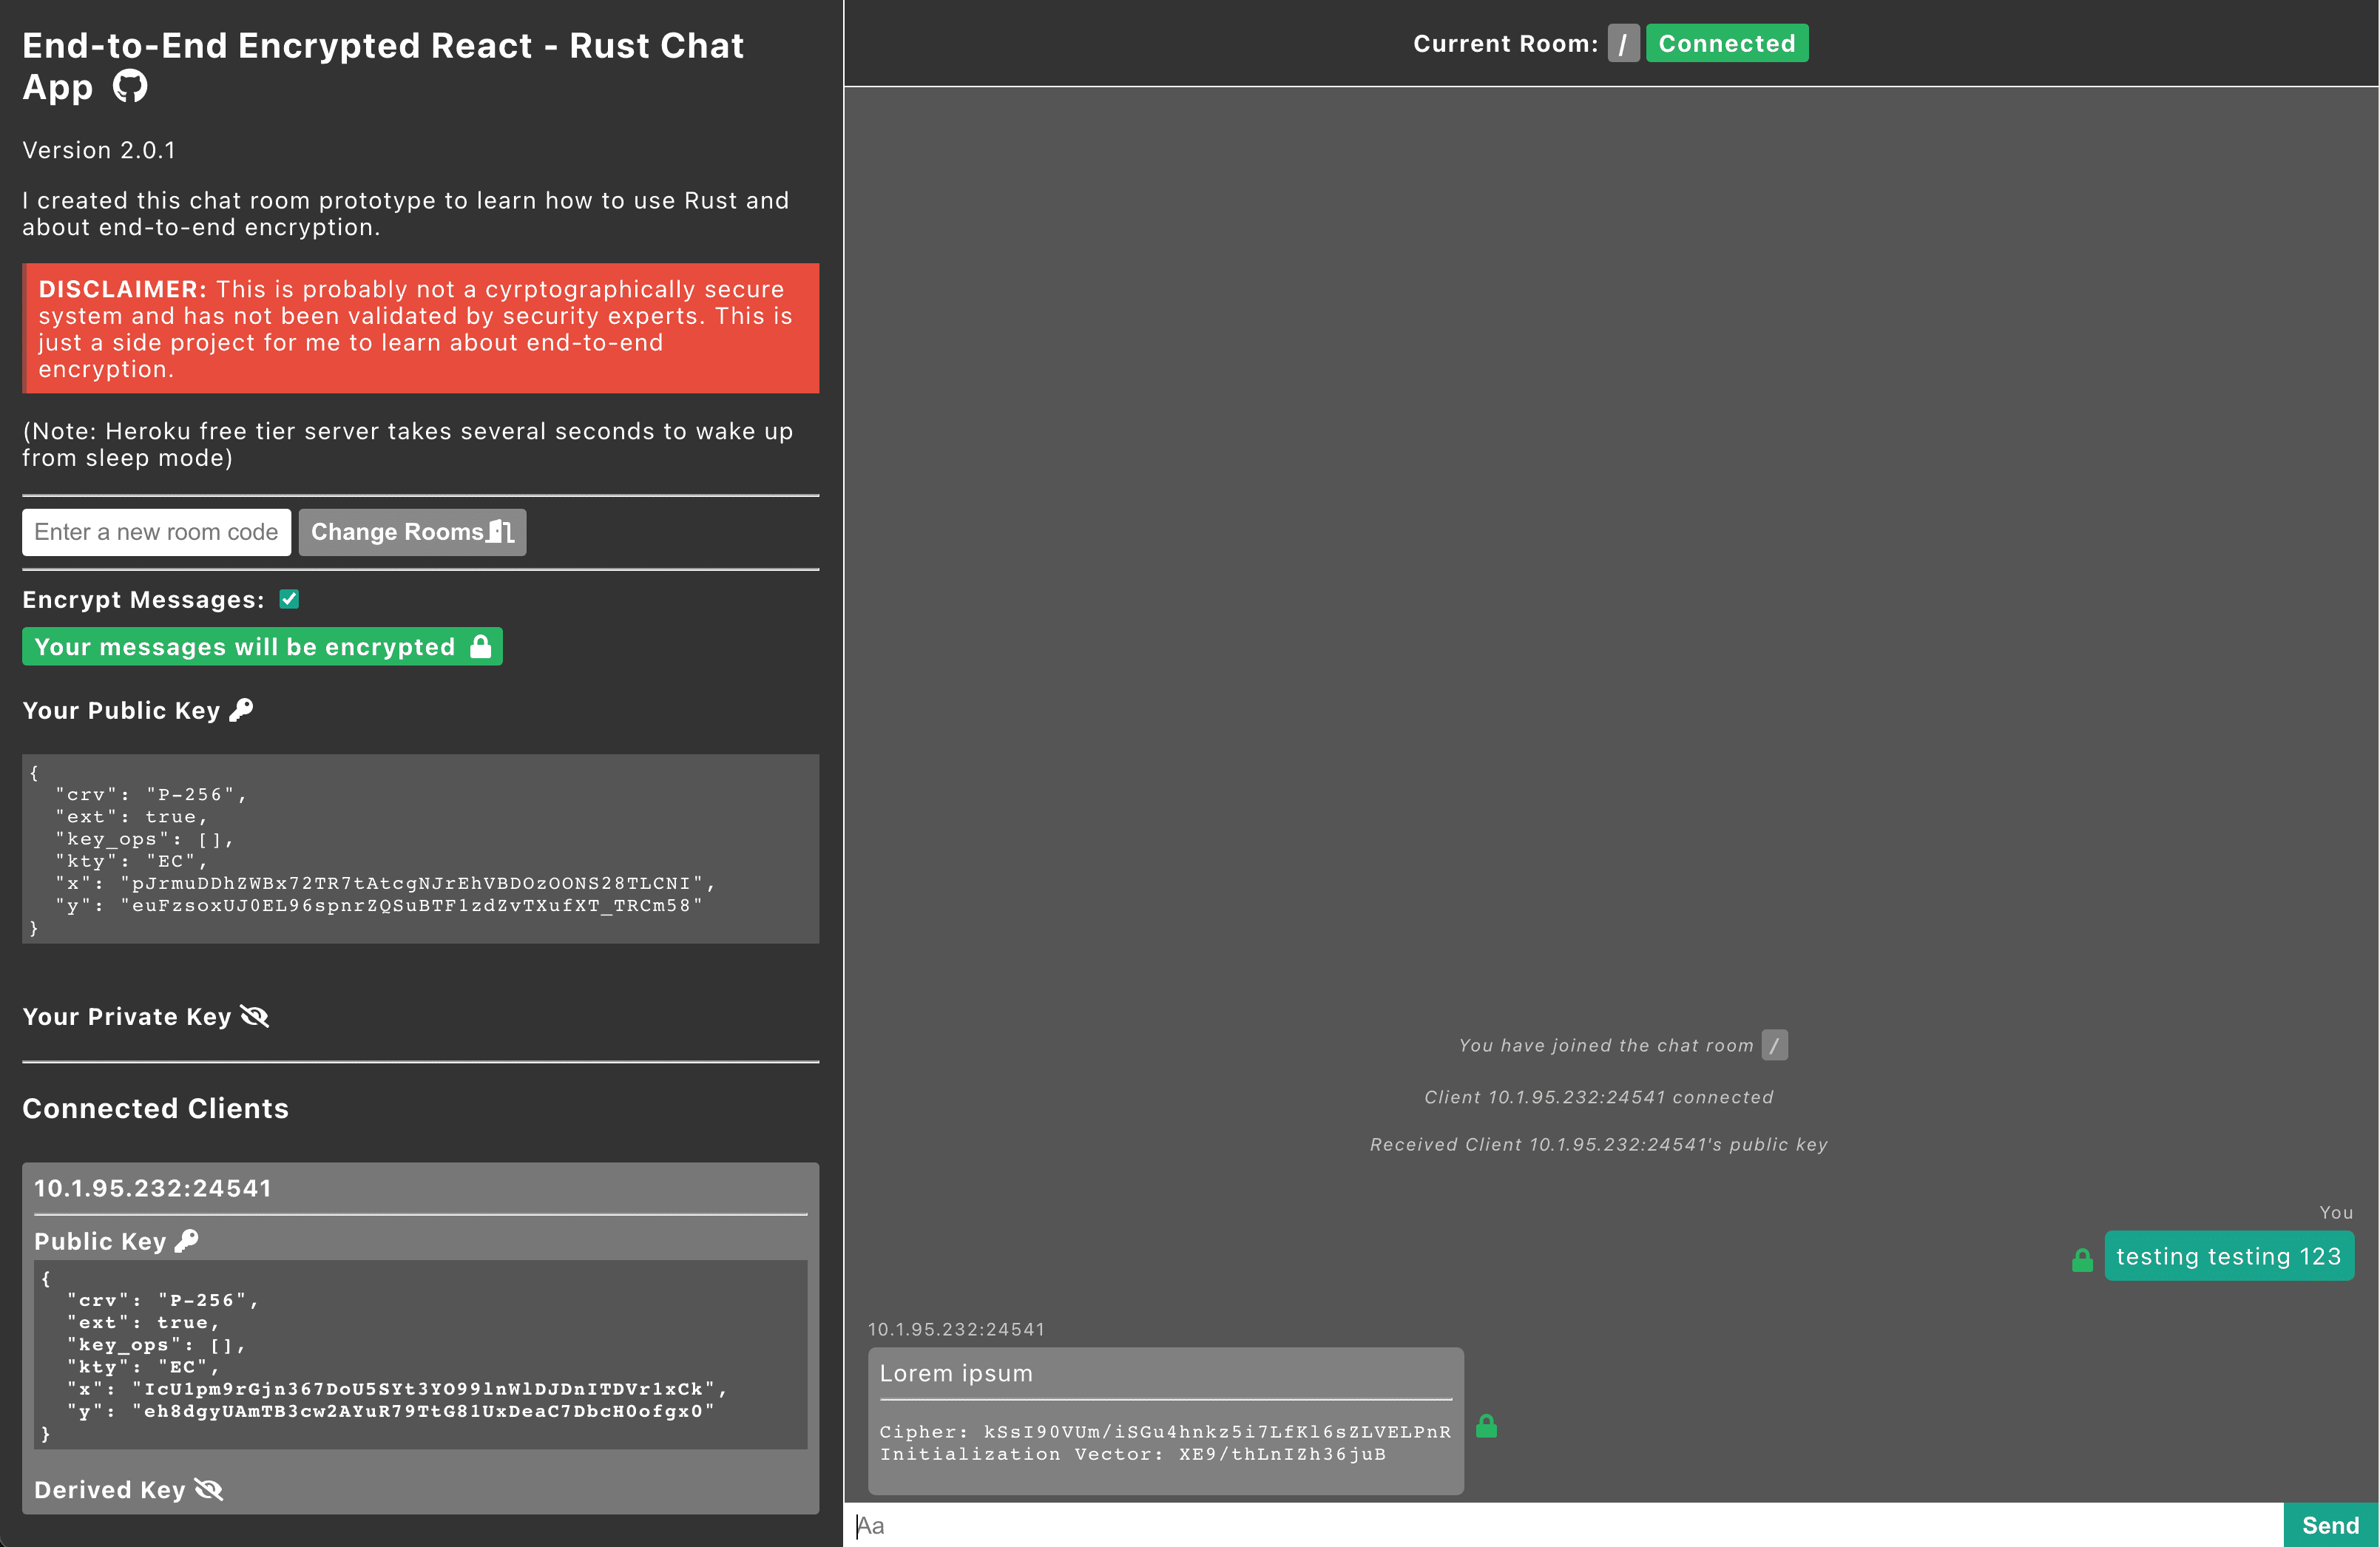 React-Rust chat screenshot